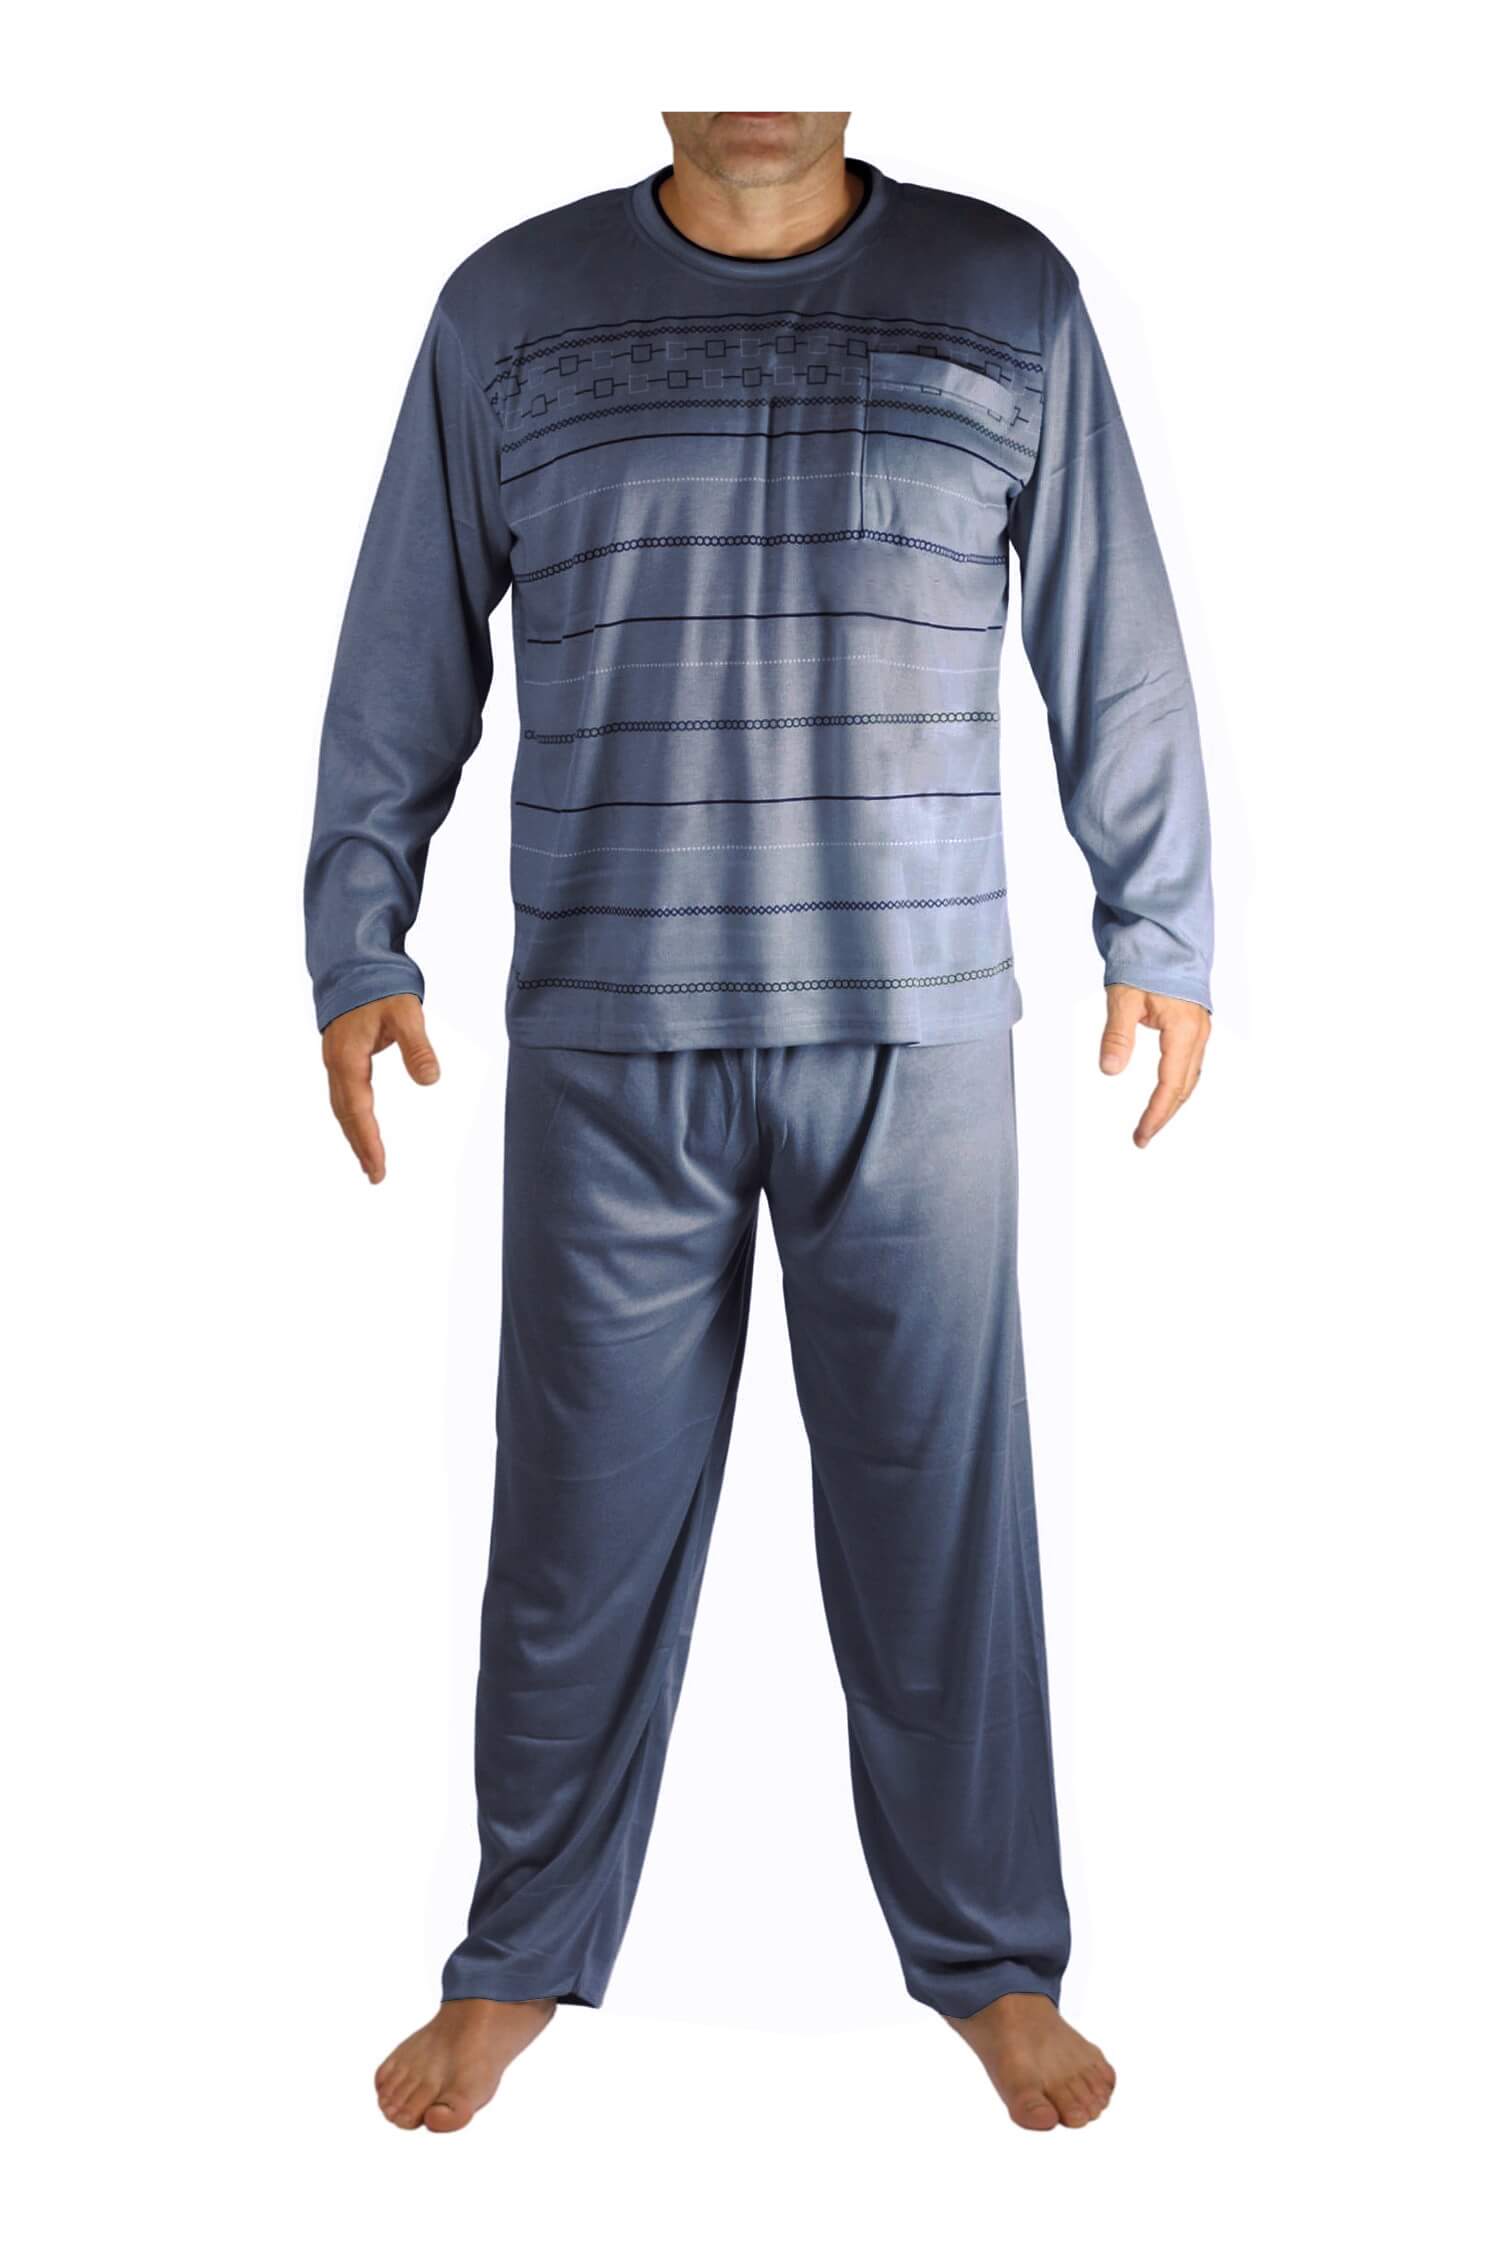 Milan pyžamo pánské dlouhé V1611 3XL šedomodrá